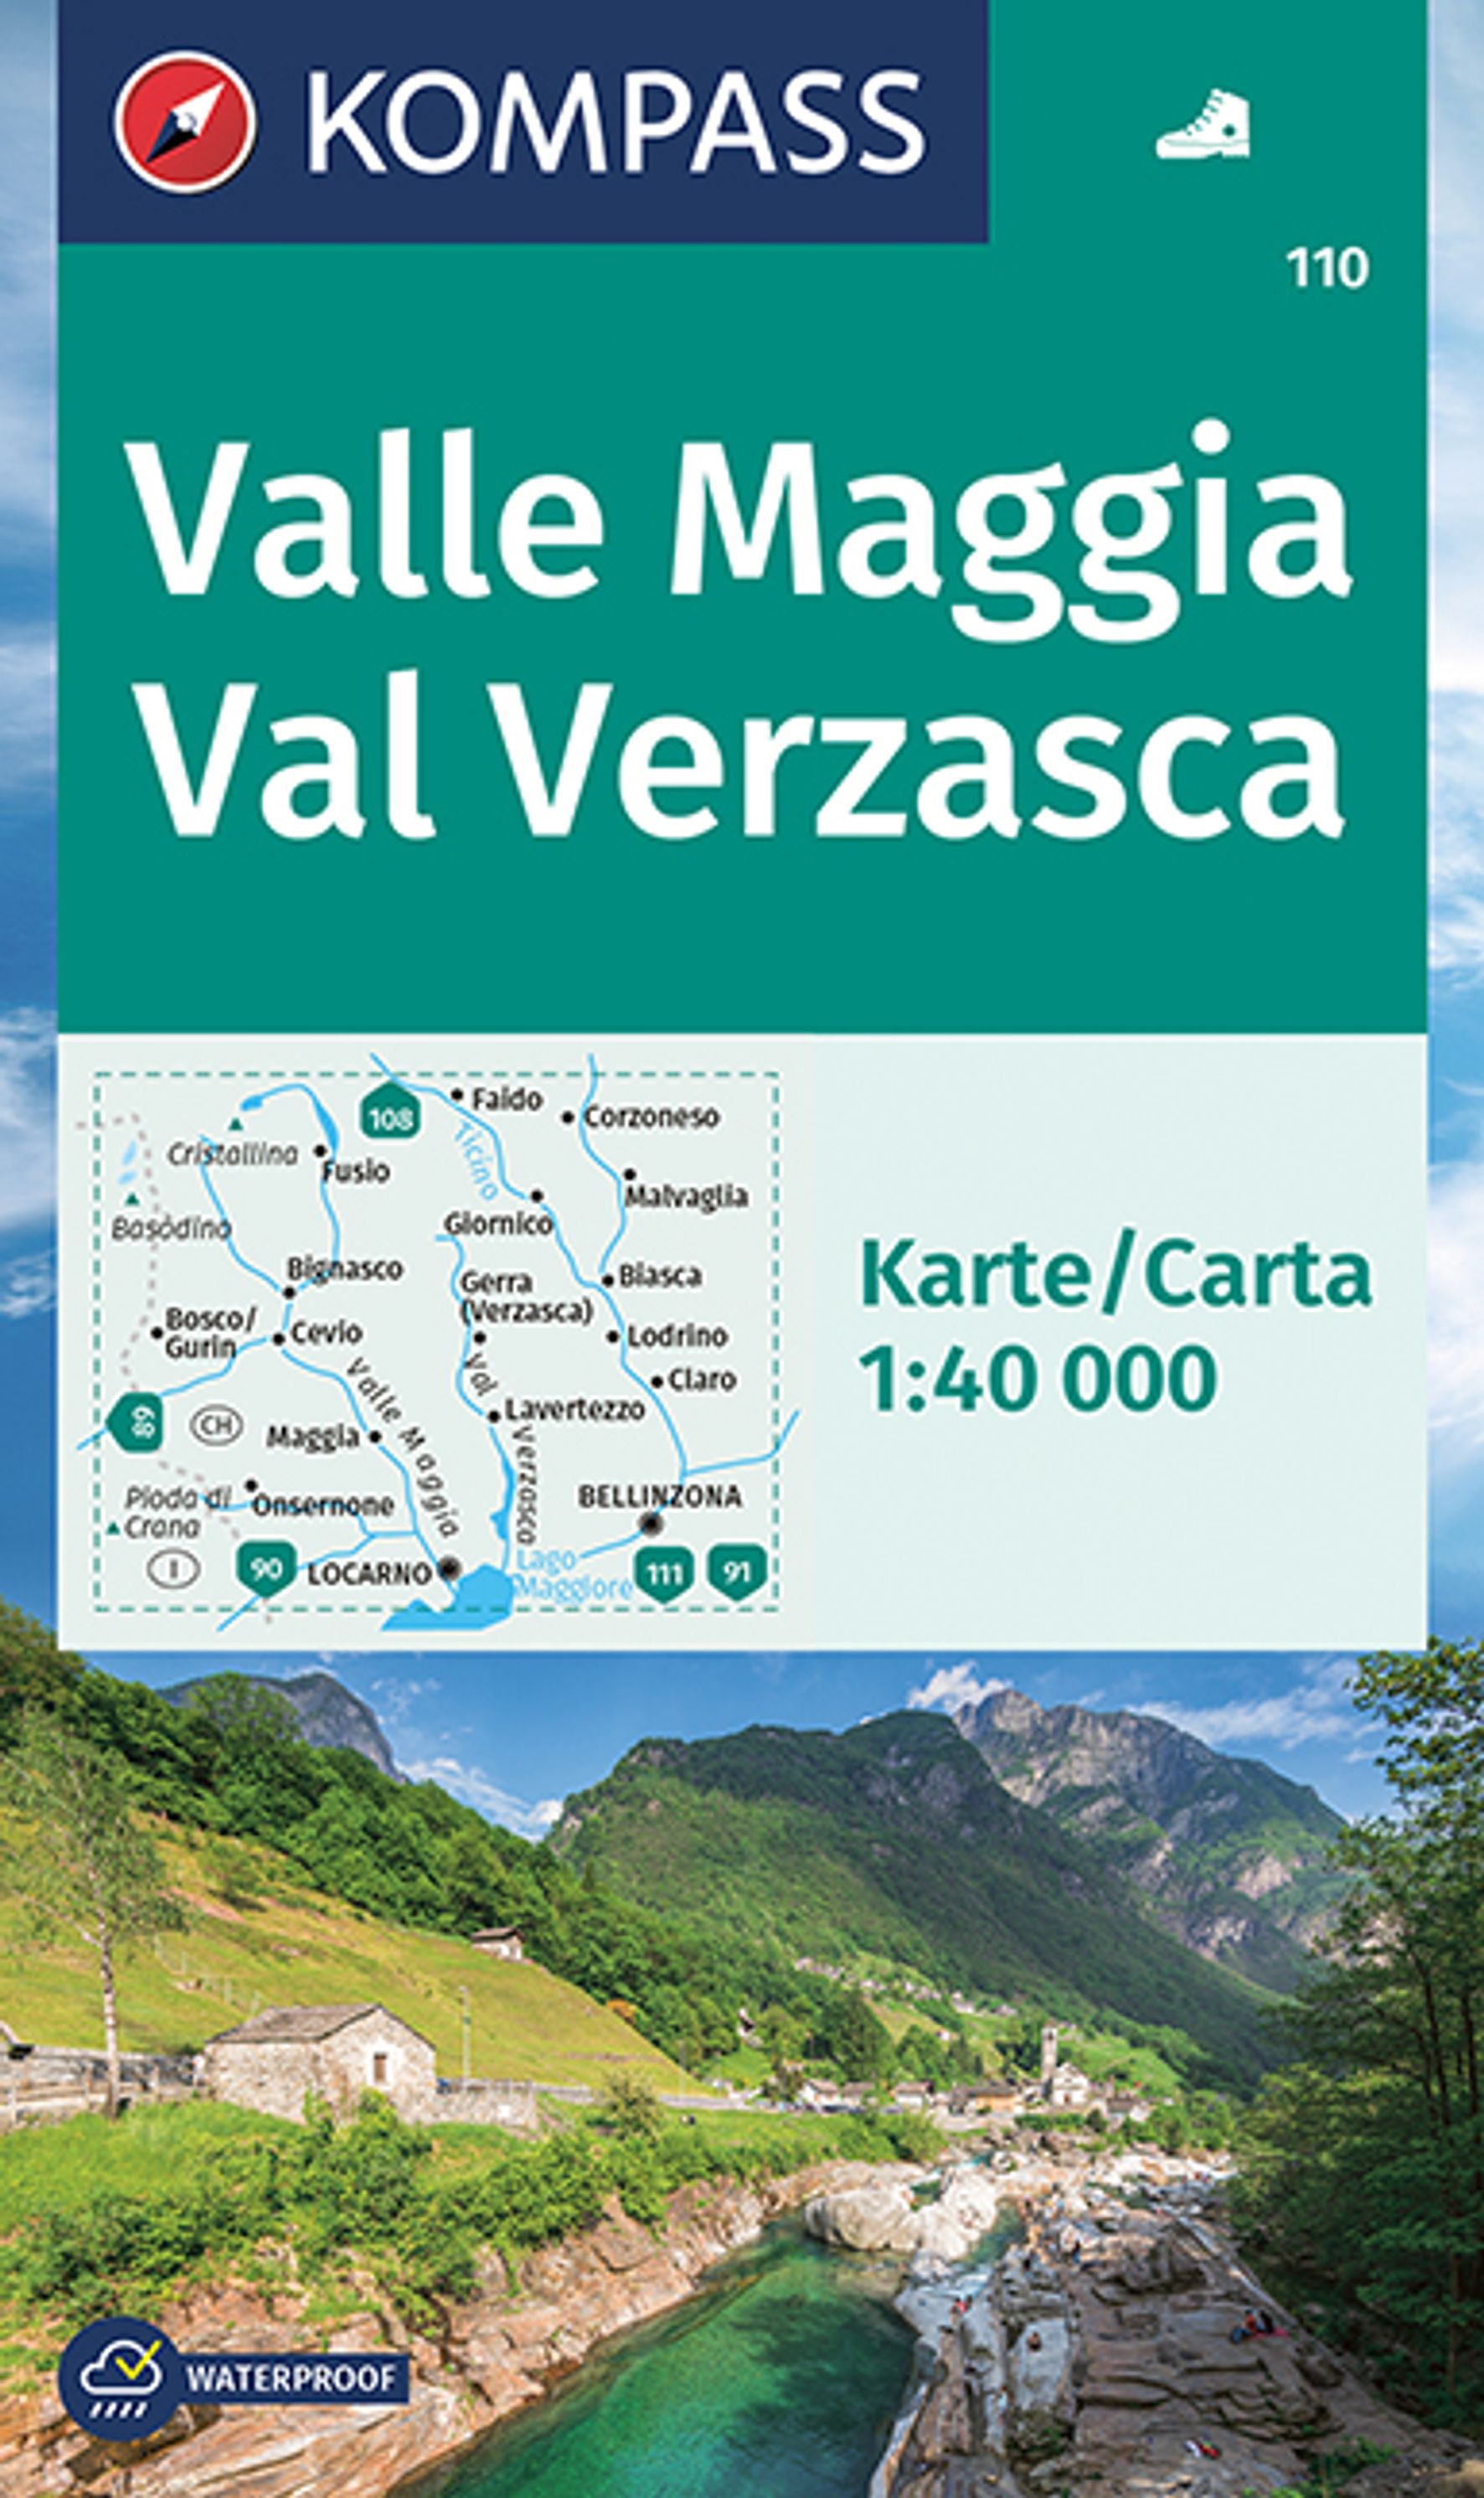 MAIRDUMONT KOMPASS Wanderkarte 110 Valle Maggia, Val Verzasca 1:40000